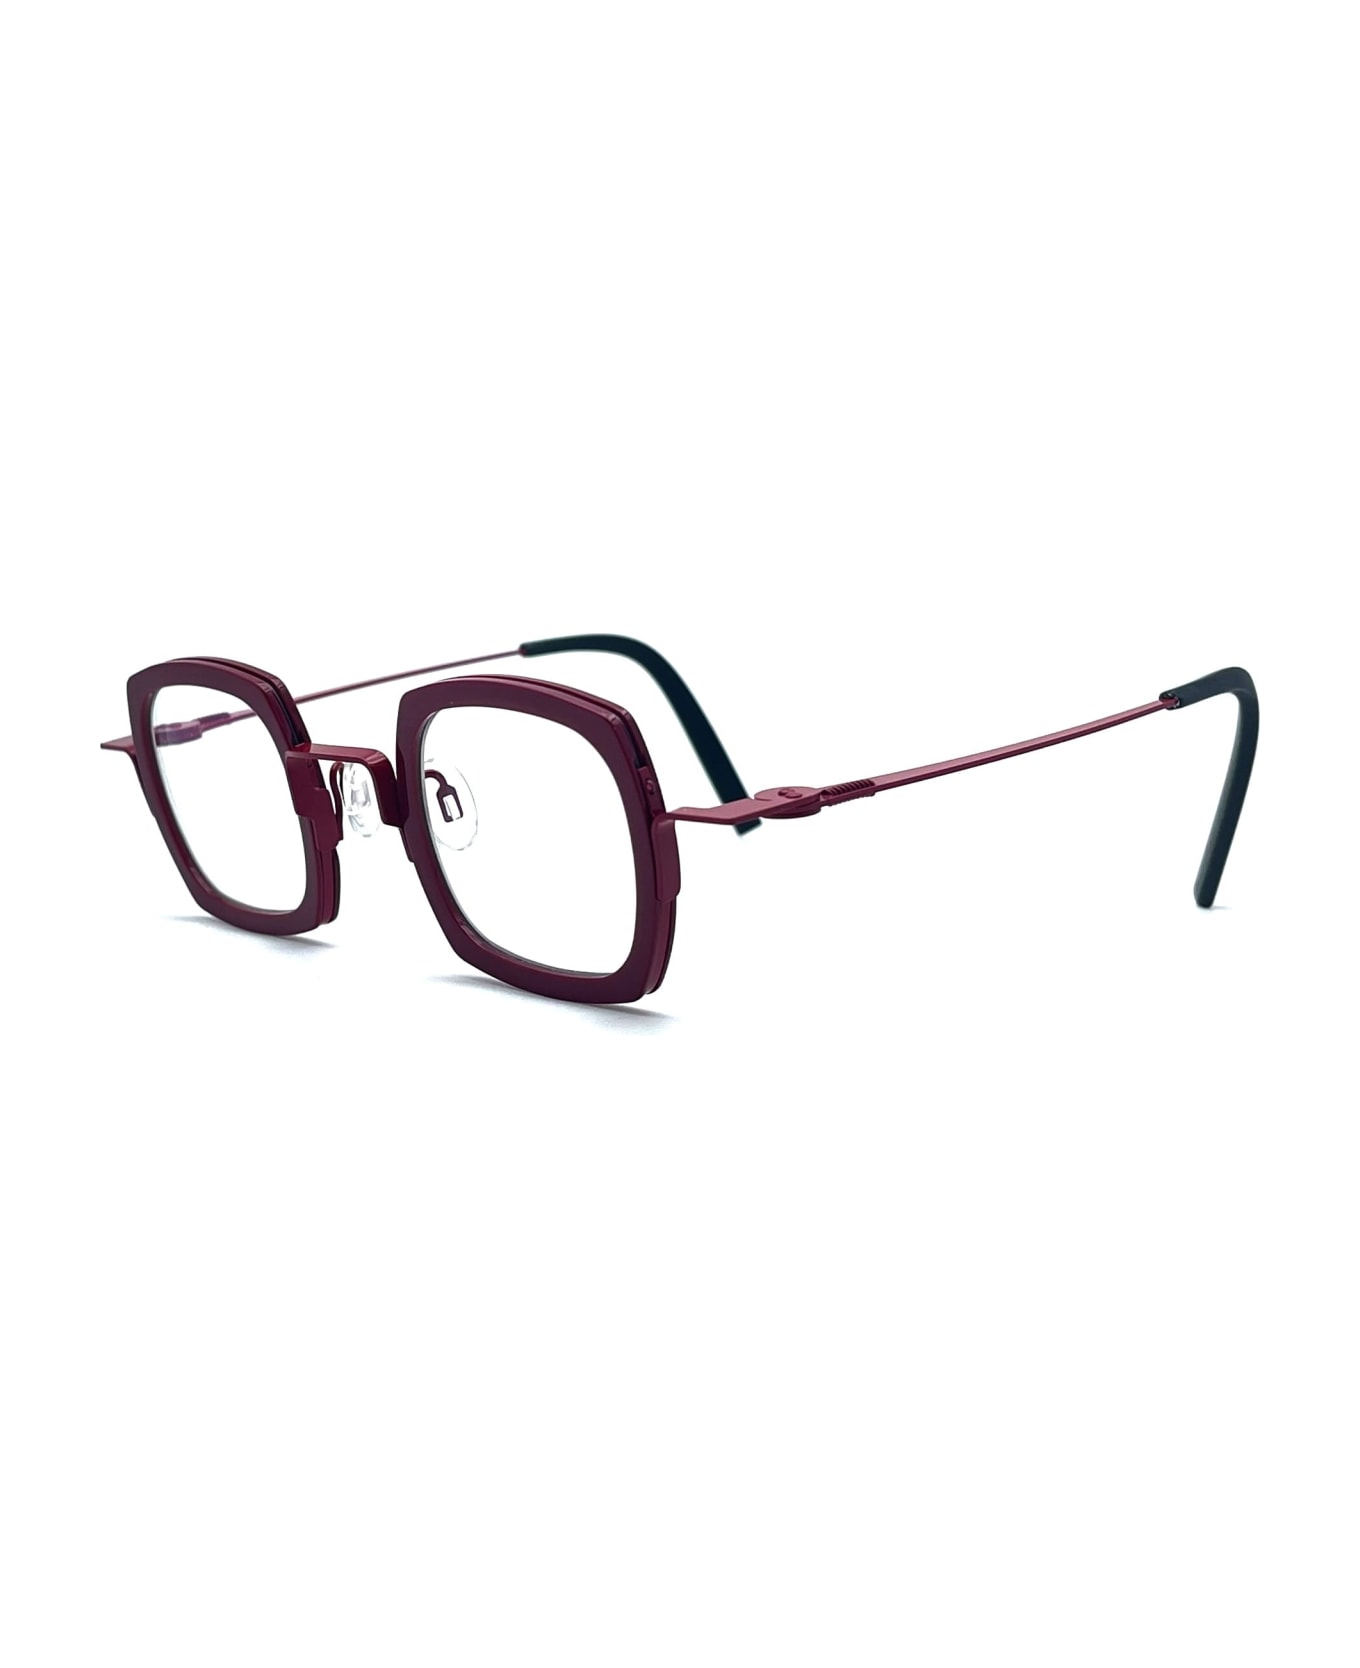 Theo Eyewear Broccoli - 48 Glasses - burgundy